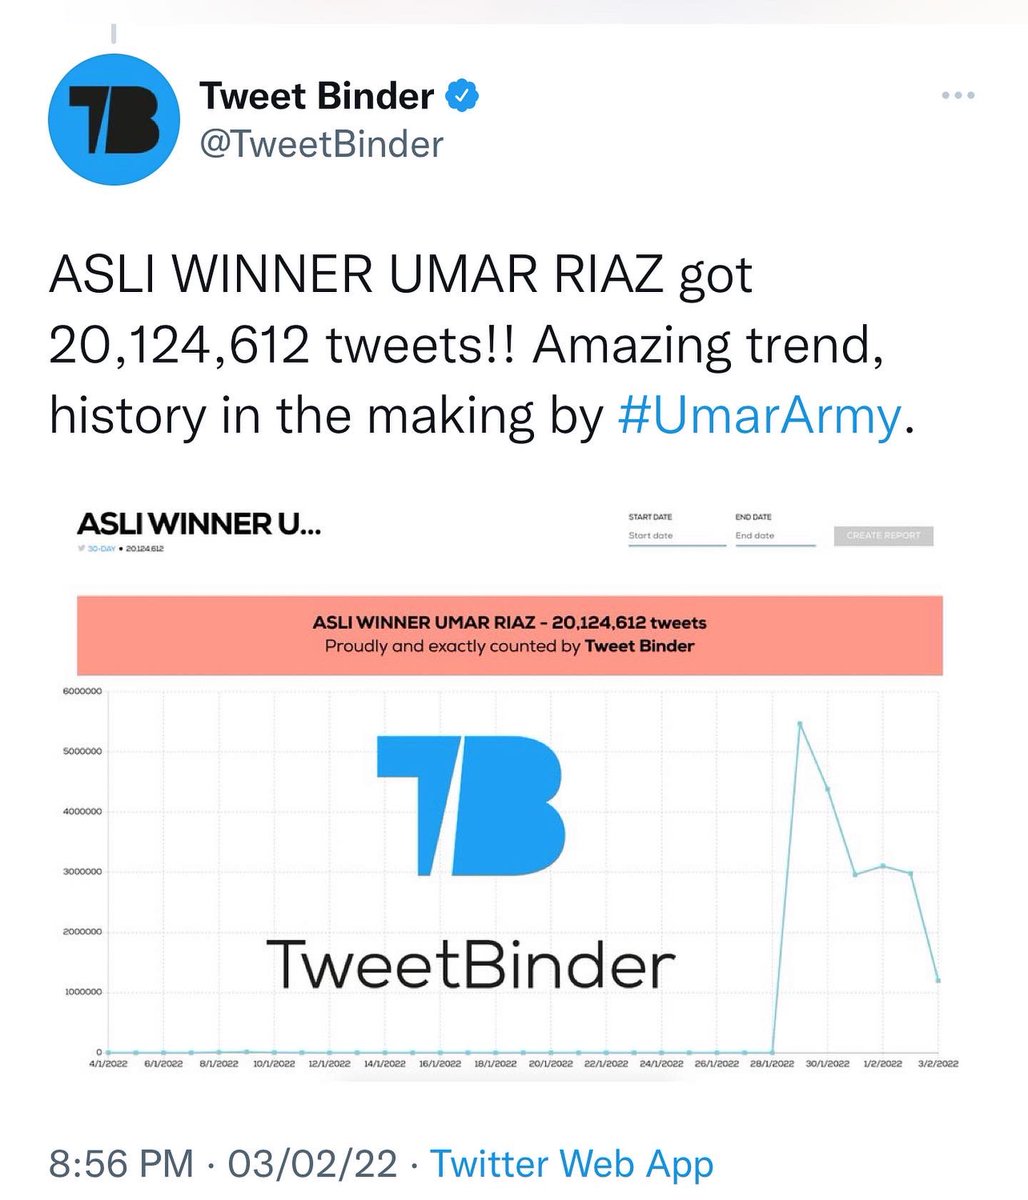 Feeling Proud To Showcase Biggest Trend Record of history of #BiggBoss ~ 20M Tweets done for #UmarRiaz by #UmarArmy 😌😌

Jo bhul gaye ho yaad karlo 🤙🤙
#TeamUmarRiaz #TumseNaHopayega